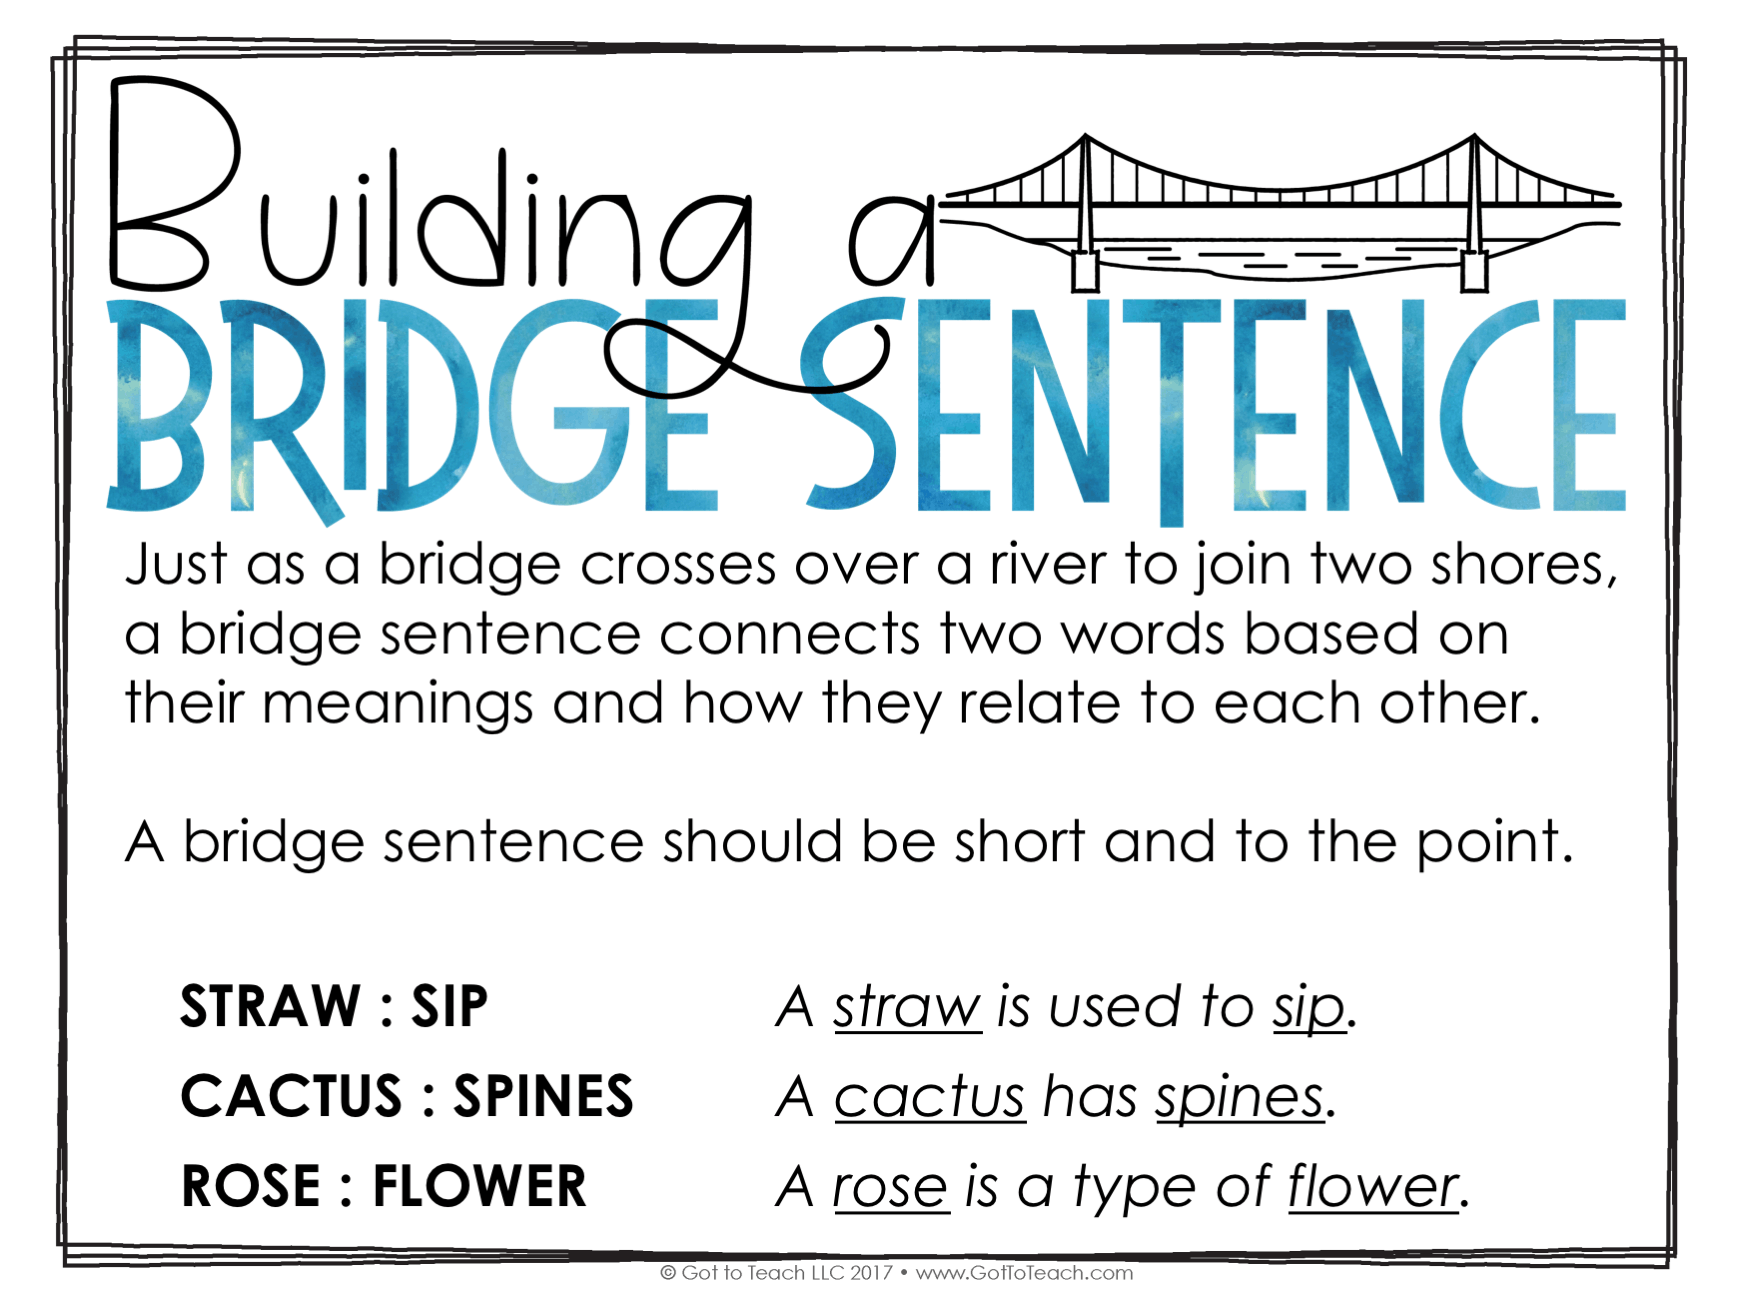  What Is A Bridge Sentence Bridge Sentence Definition Types And 